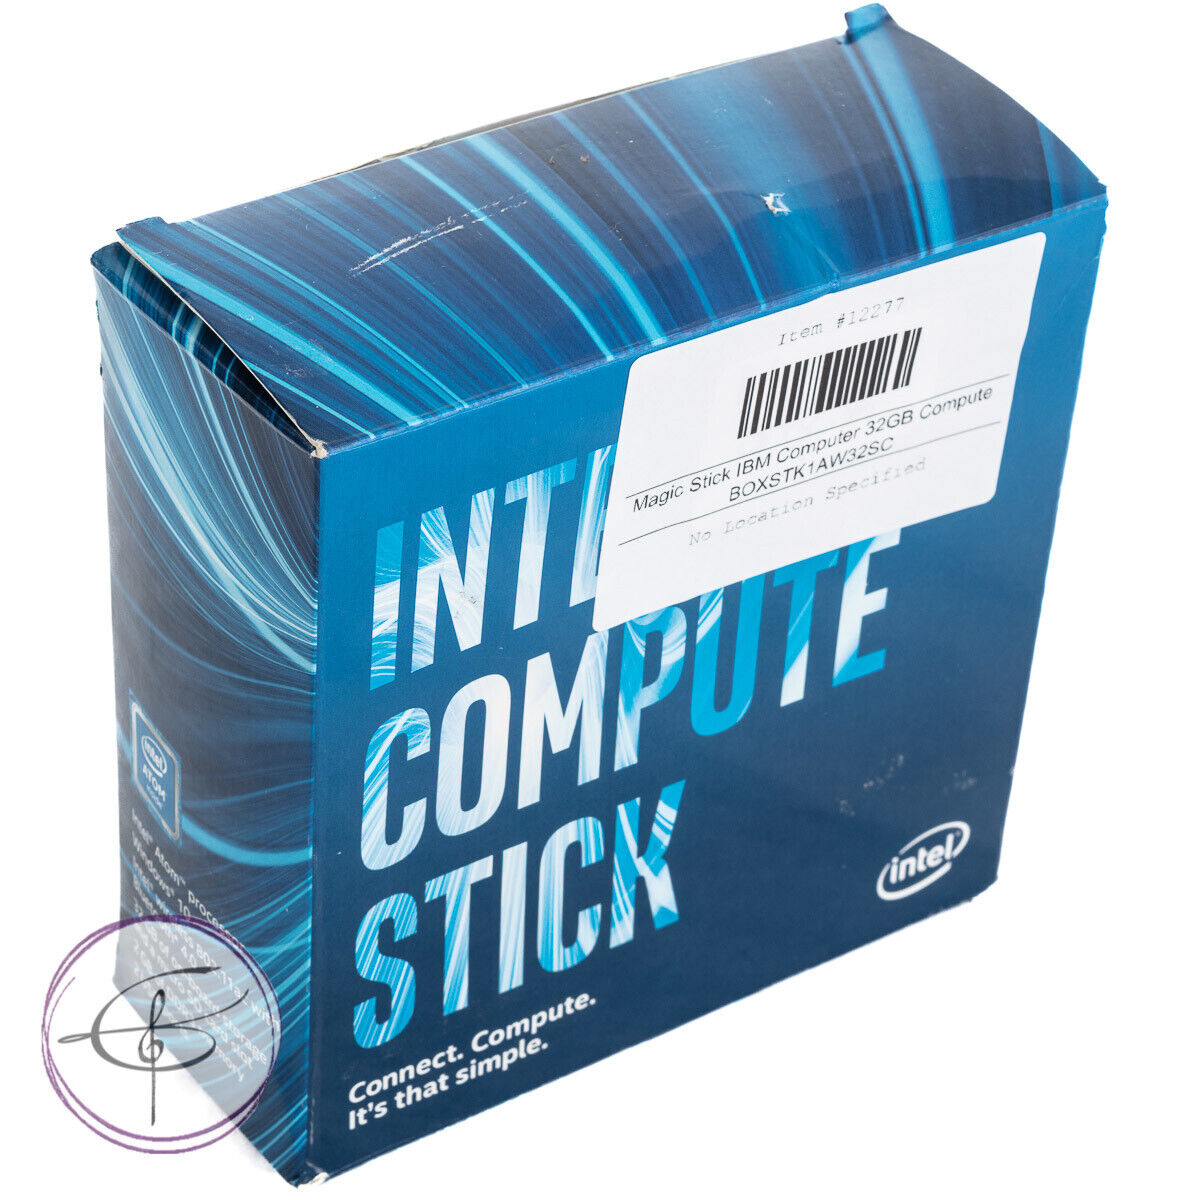 Magic Stick IBM Intel Computer 32GB Compute BOXSTK1AW32SC